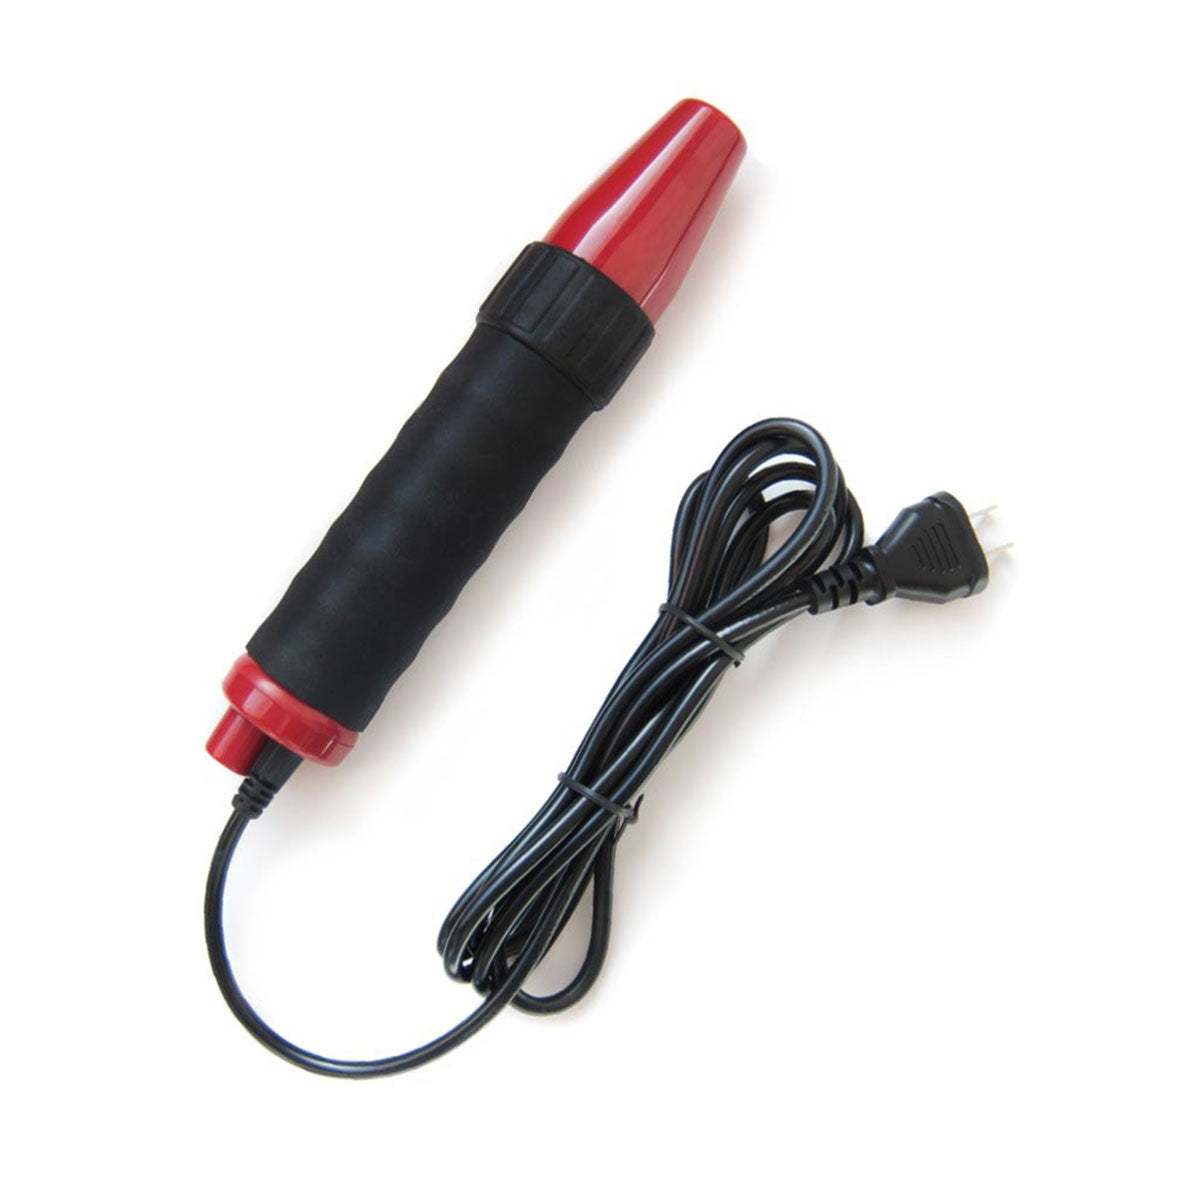 KinkLab Neon Wand Electro-Stimulation Vibrator Kit